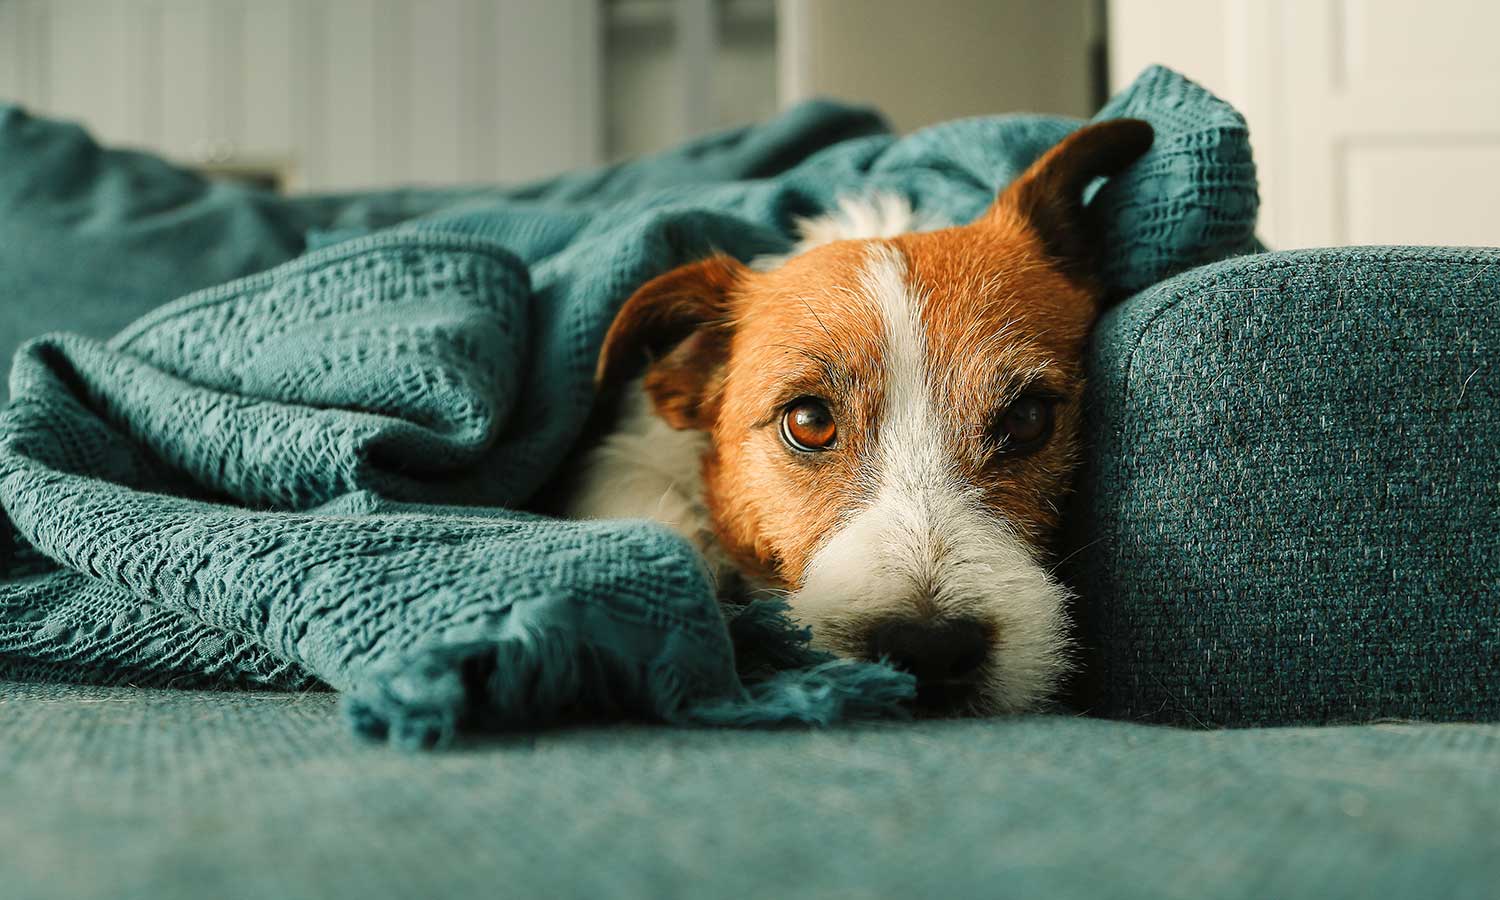 A dog cuddled into blankets